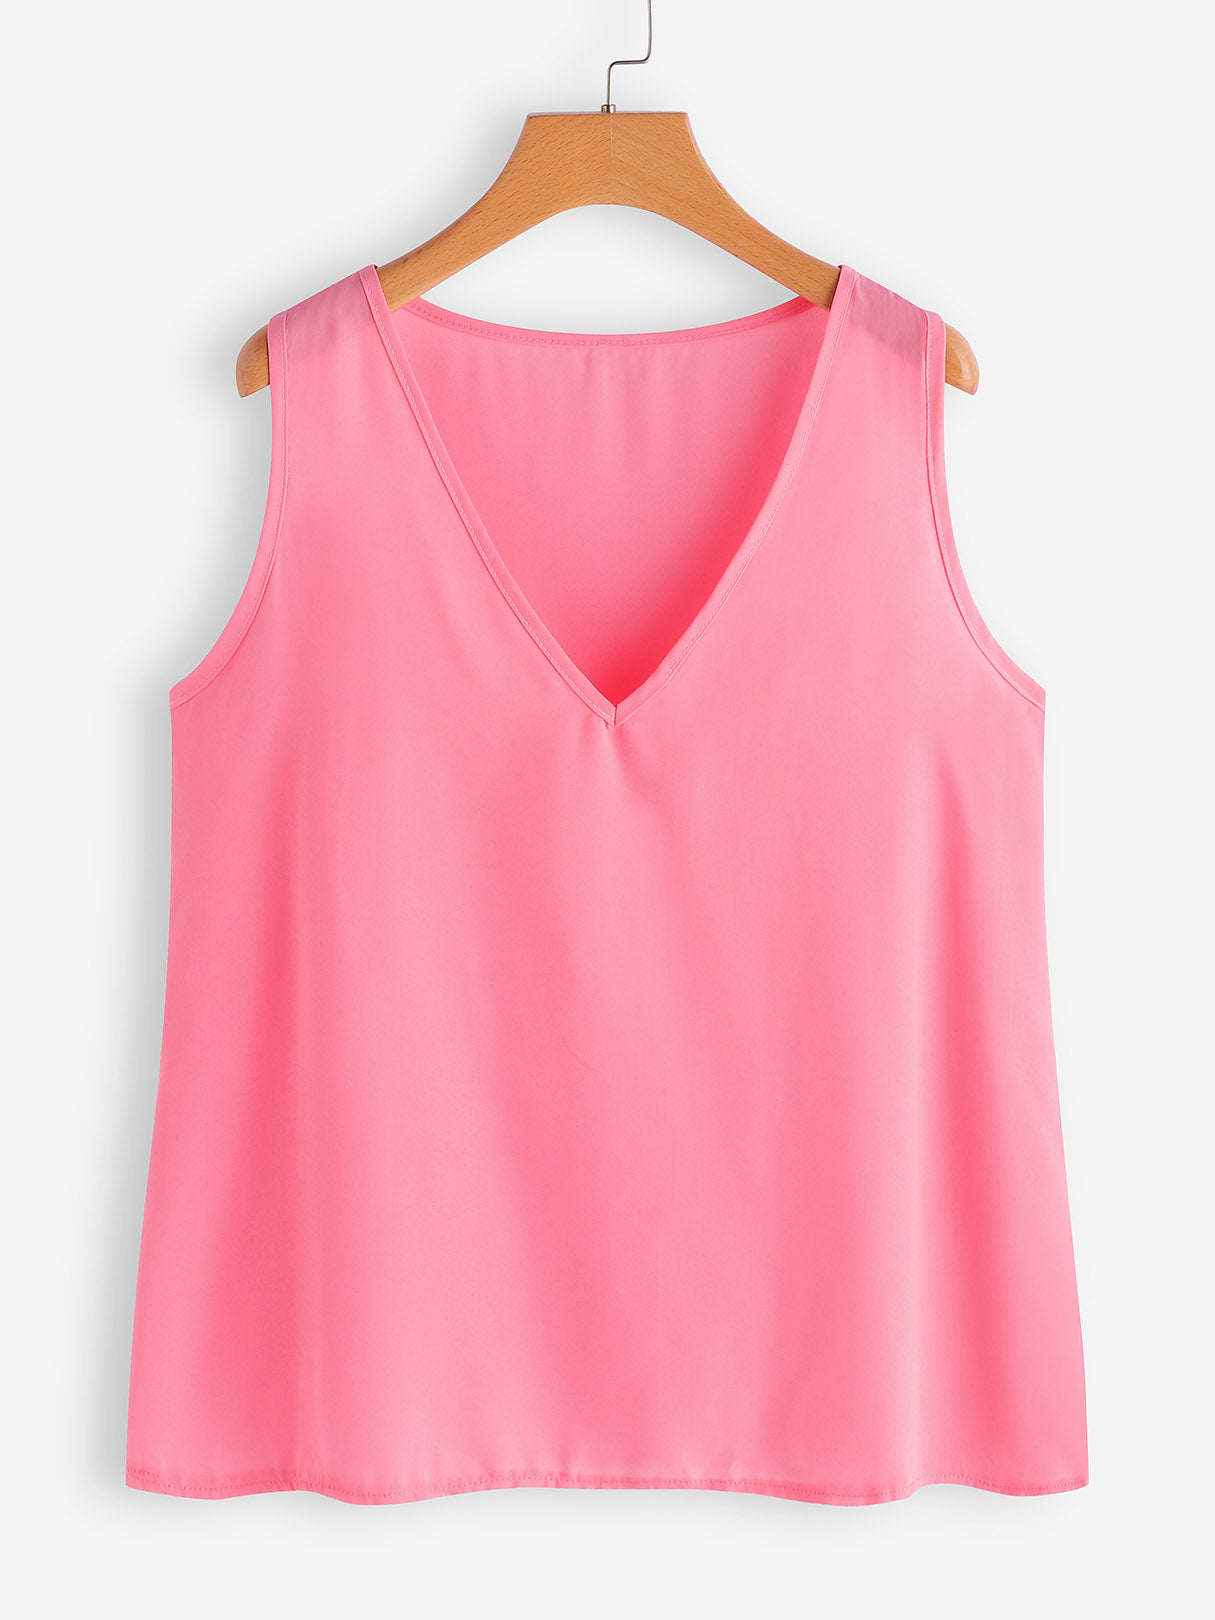 Wholesale V-Neck Plain Sleeveless Pink Plus Size Tops